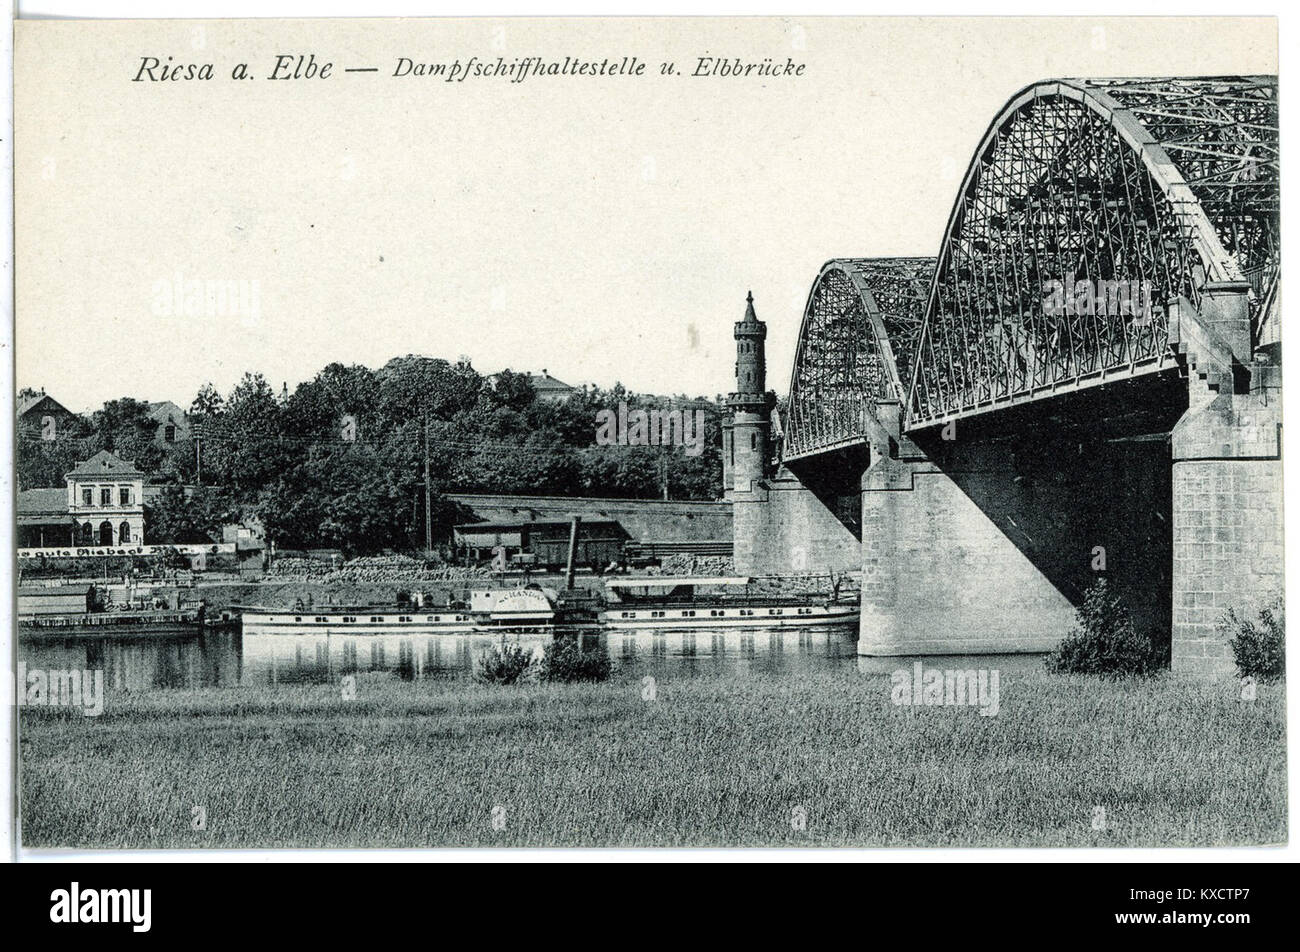 21741-Riesa-1920-Dampfschiffhaltestelle mit Dampfer-Brück & Sohn Kunstverlag Stock Photo